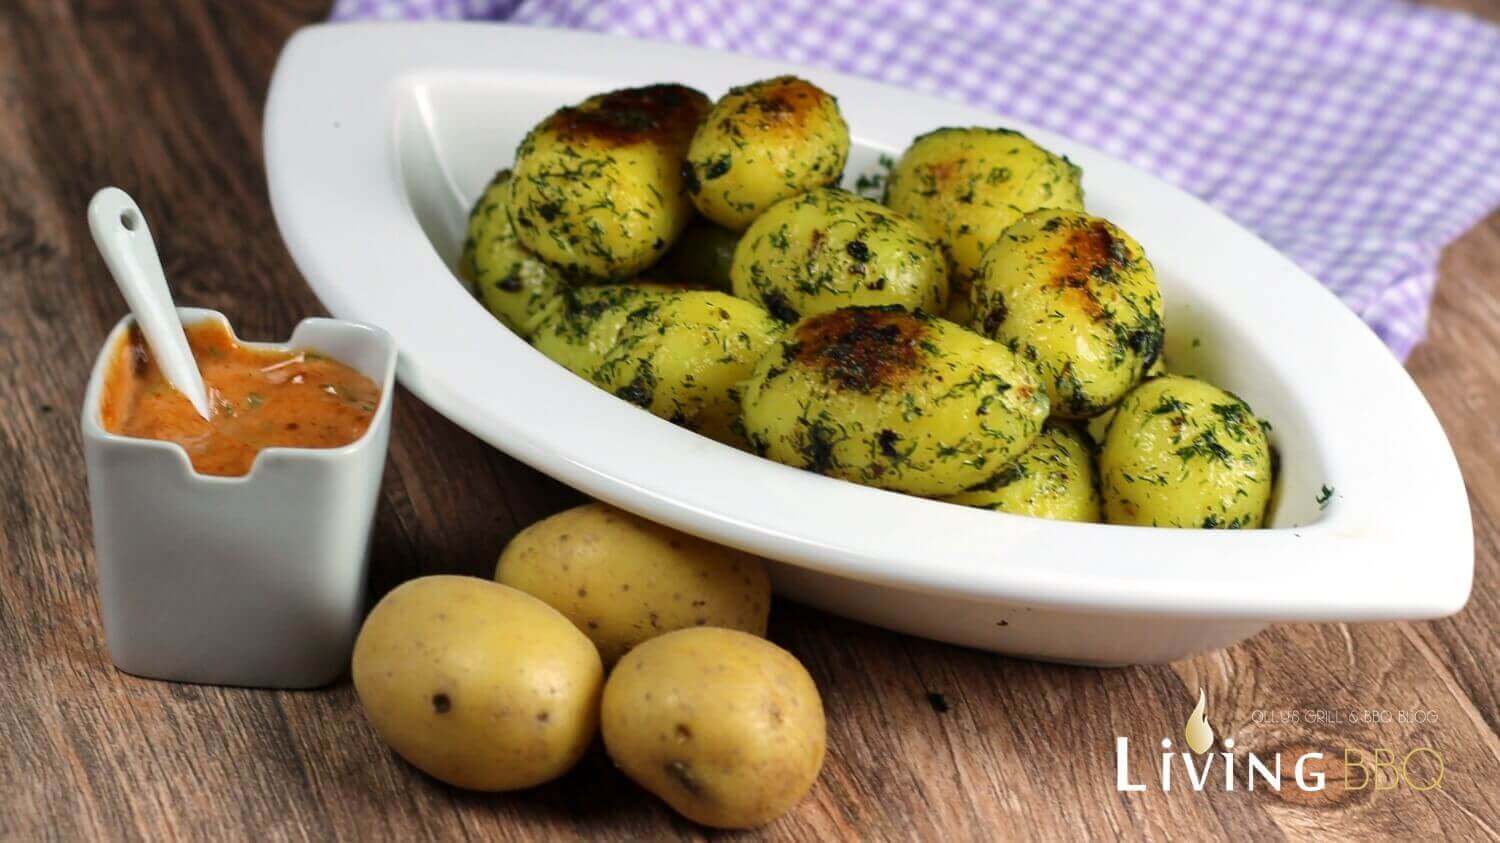 Dill Röstkartoffeln mit Sauce Andalouse (Andalusische Sauce) | Living BBQ